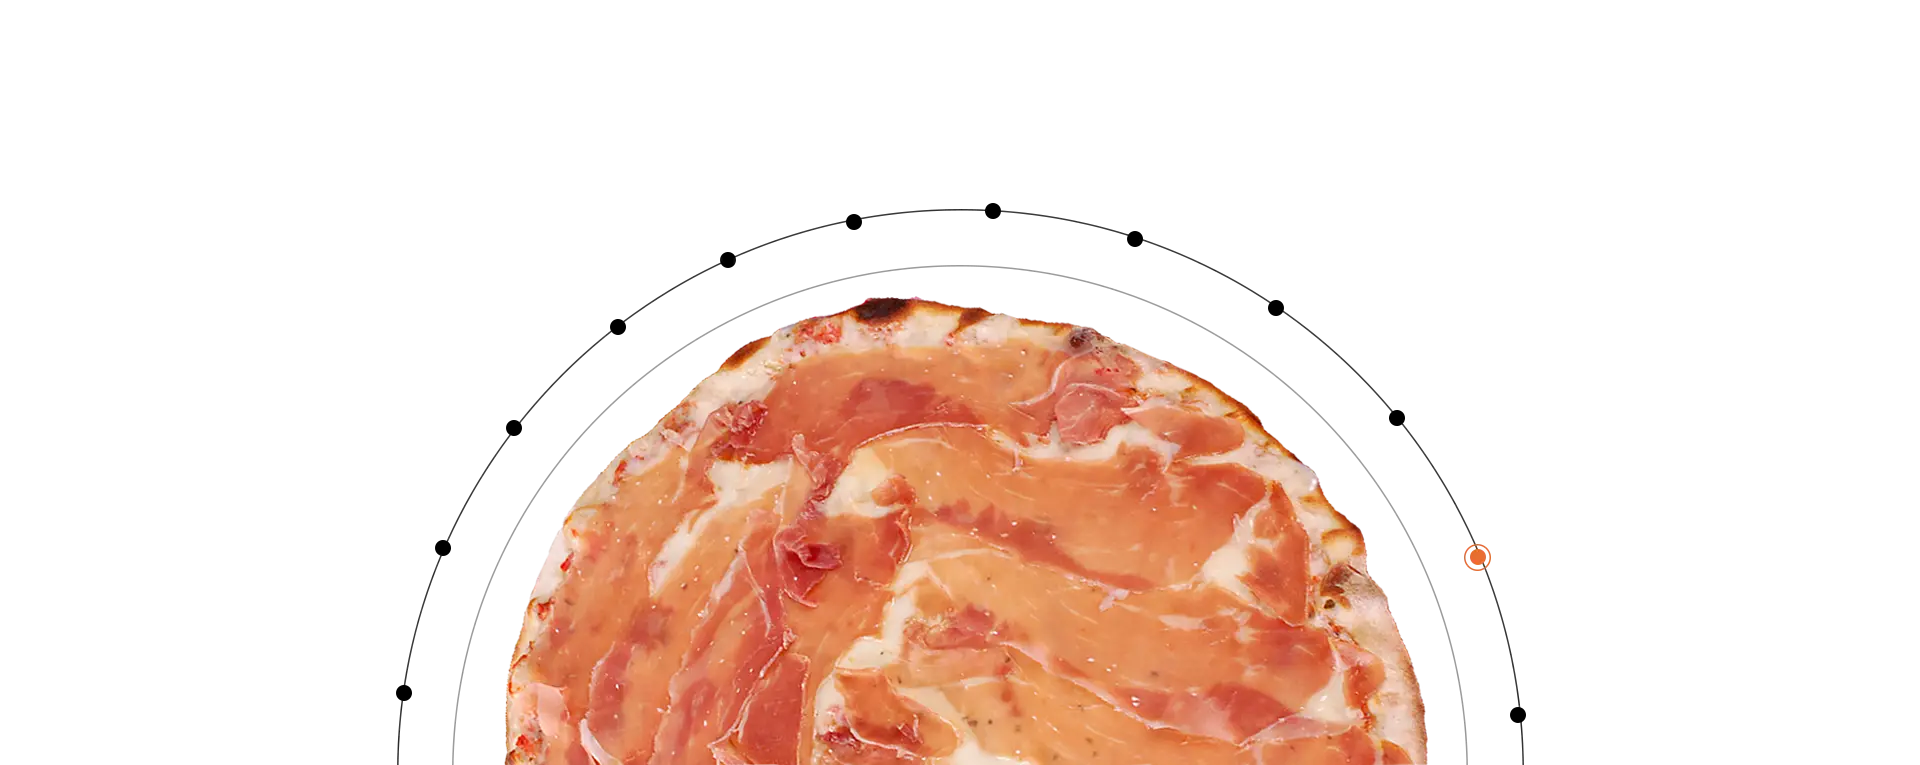 elipse_pizza-espanhola.webp